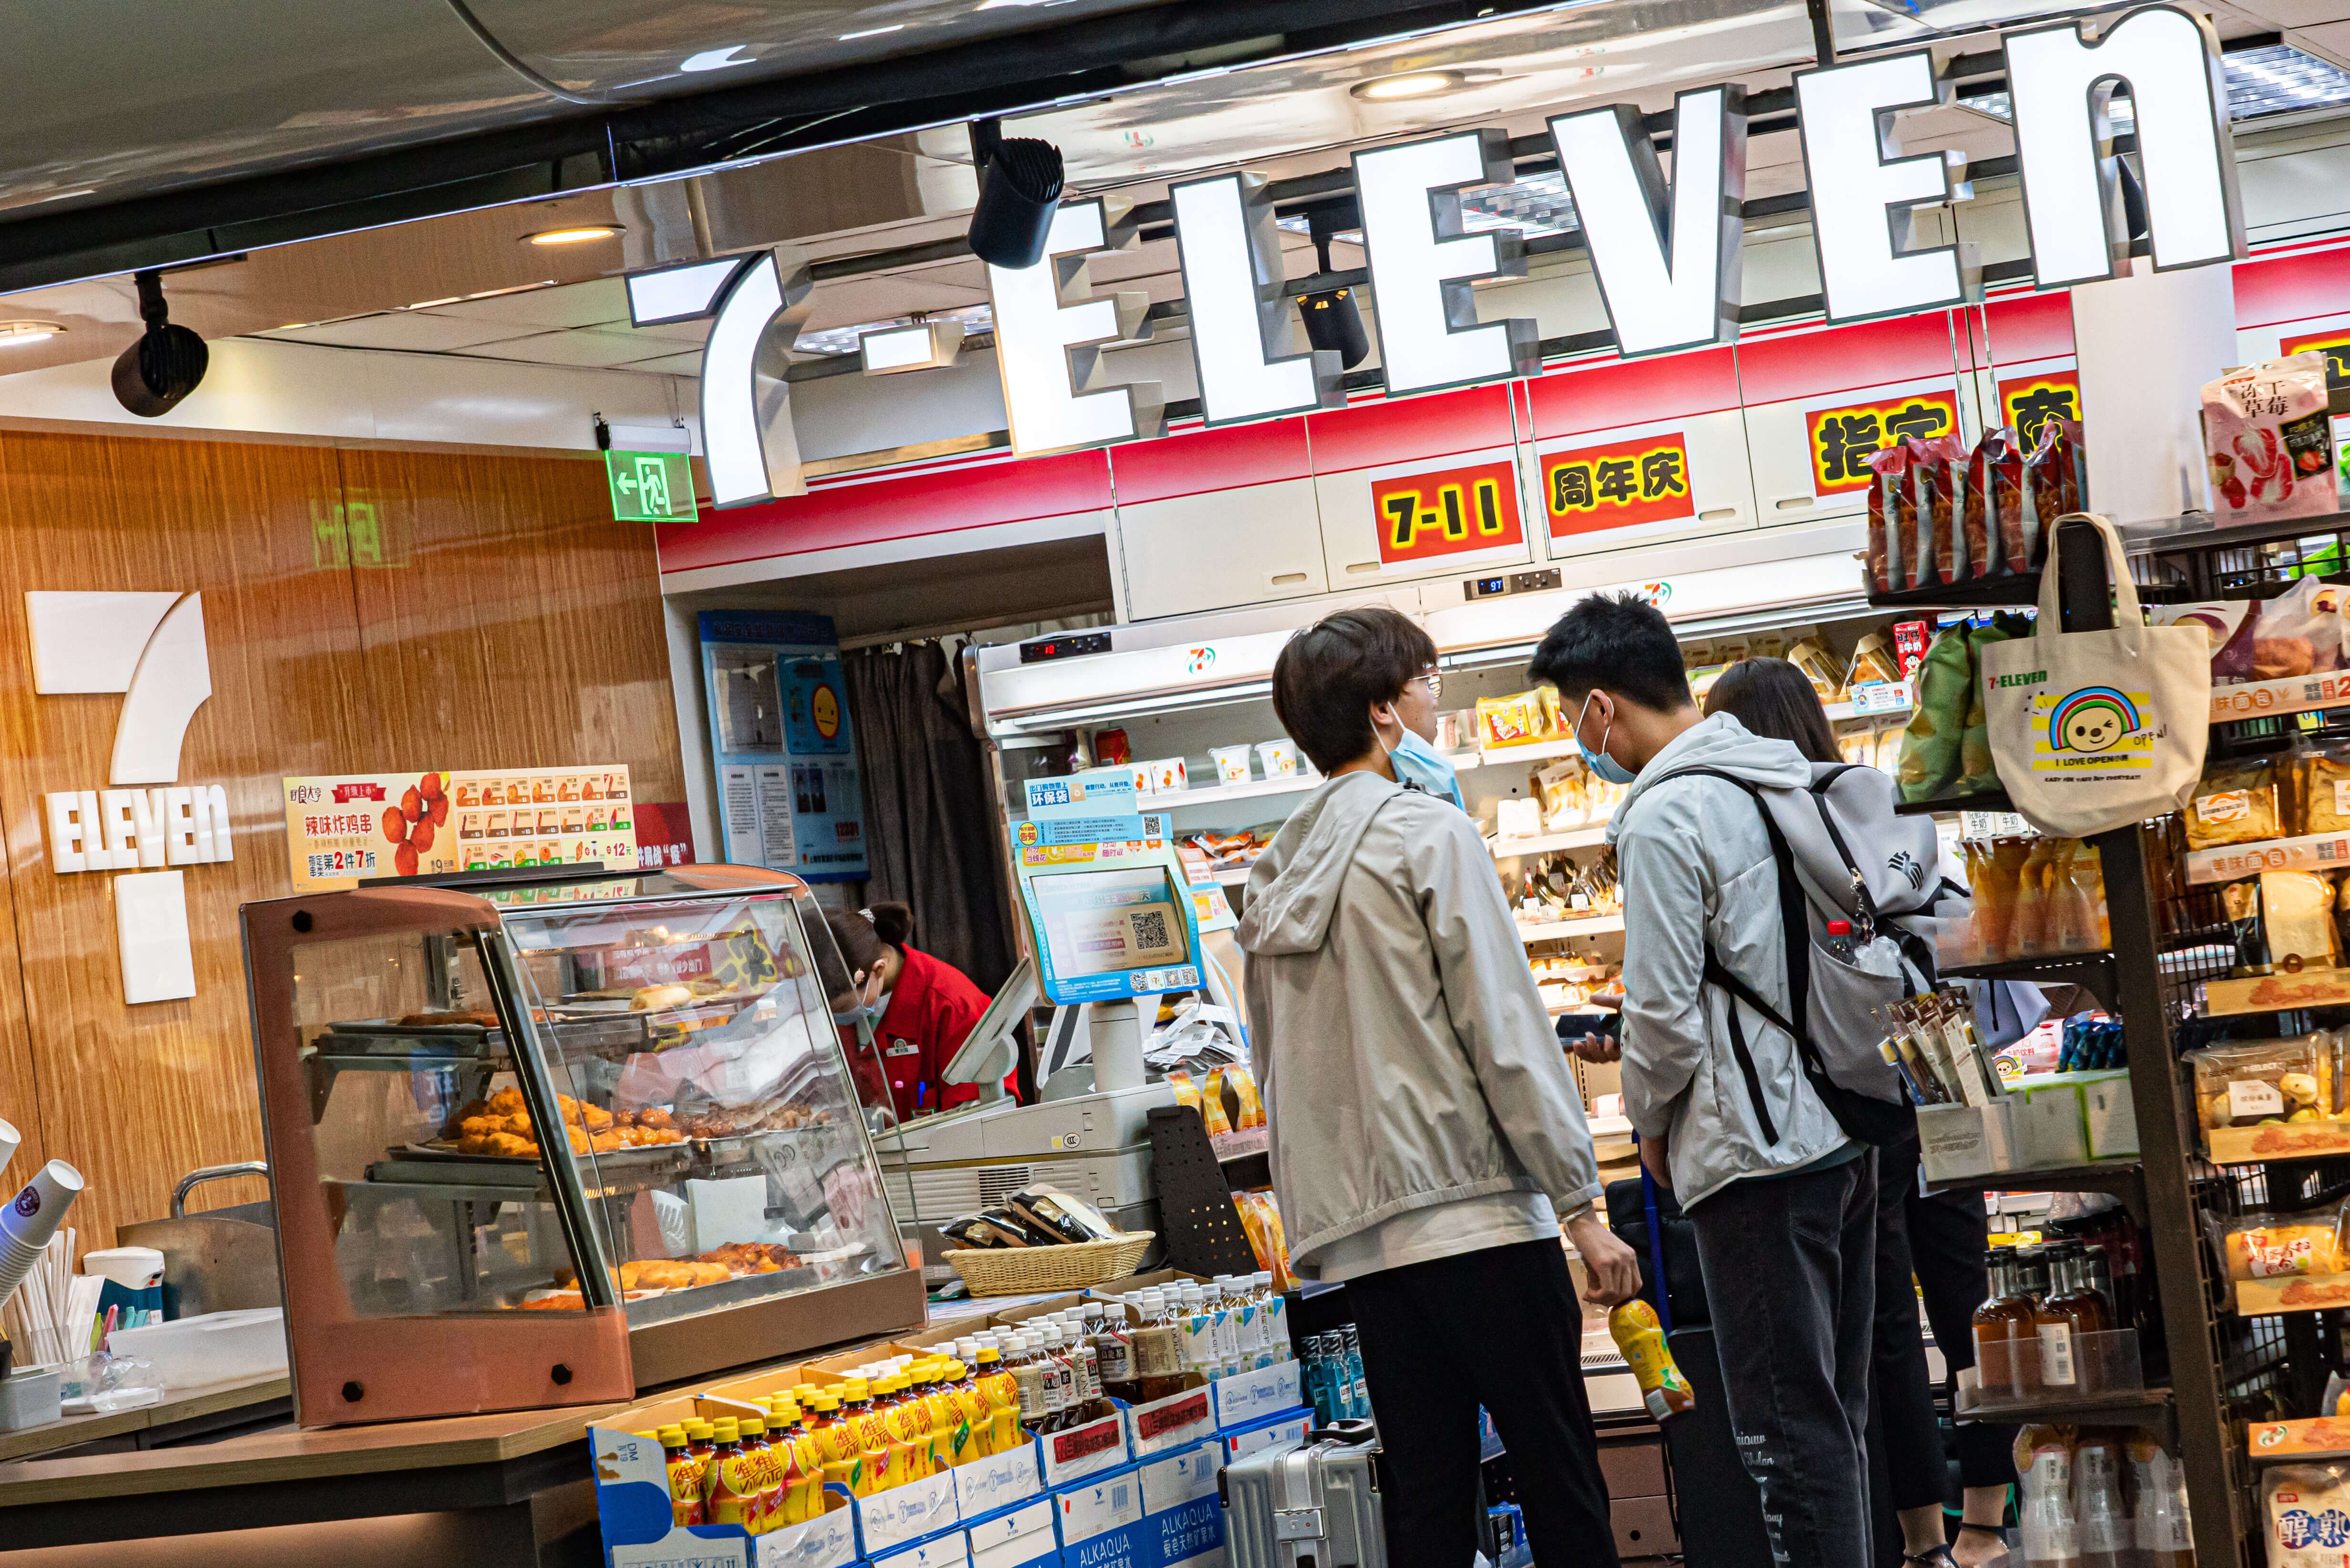 7-Eleven บริษัทแม่ญี่ปุ่น เตรียมขยายสาขาทั่วโลก 100,000 สาขา ในปี 2030